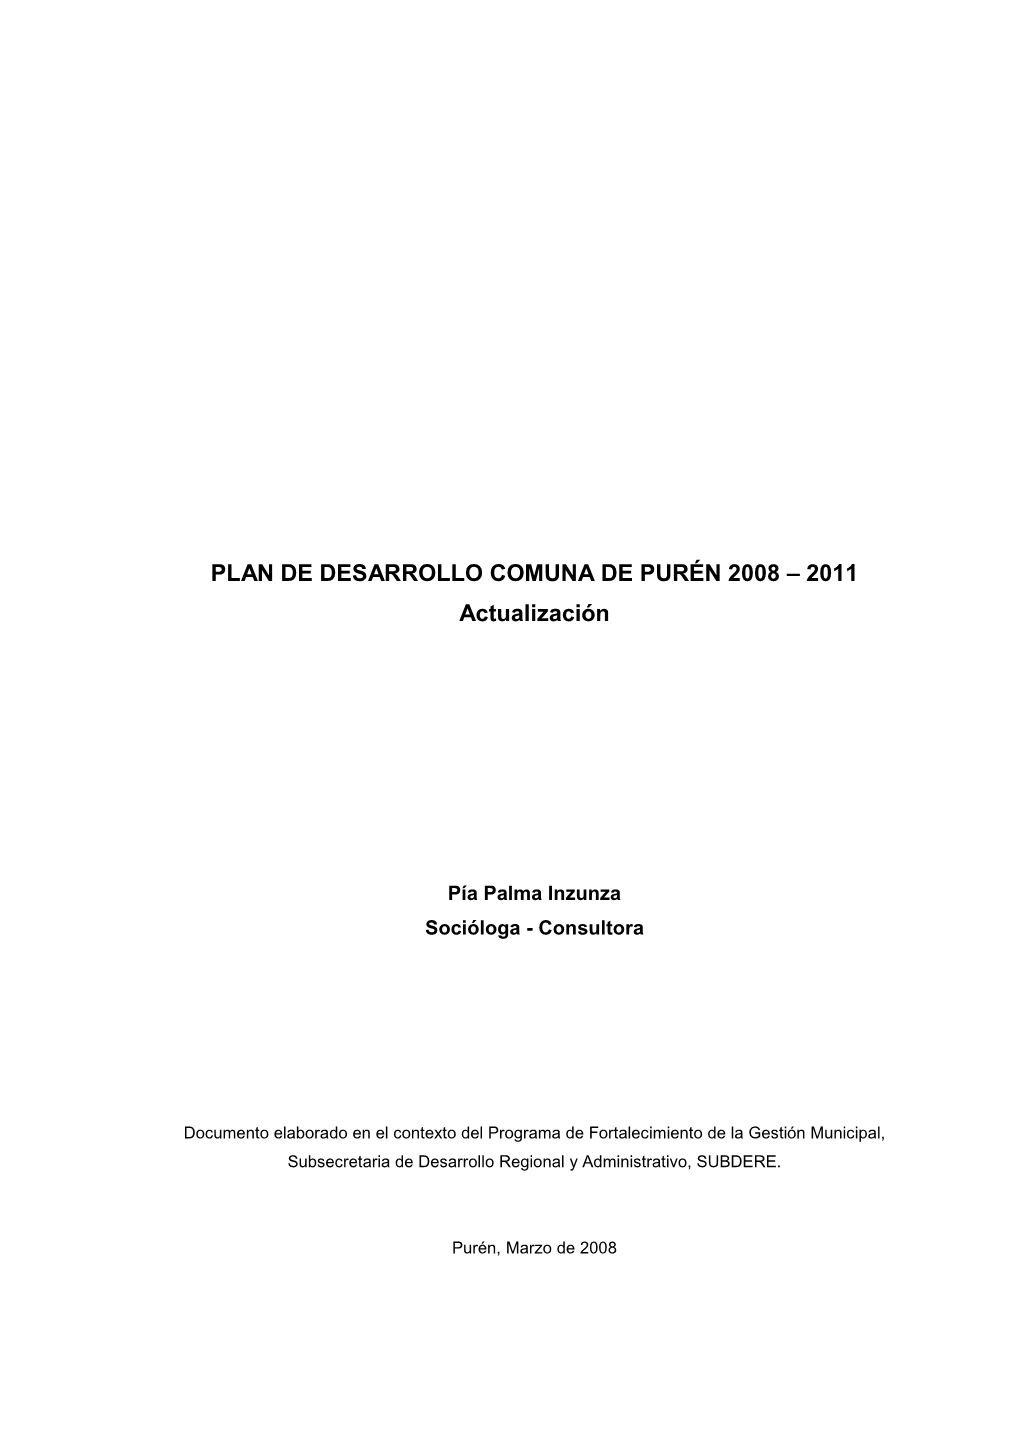 PLAN DE DESARROLLO COMUNA DE PURÉN 2008 – 2011 Actualización